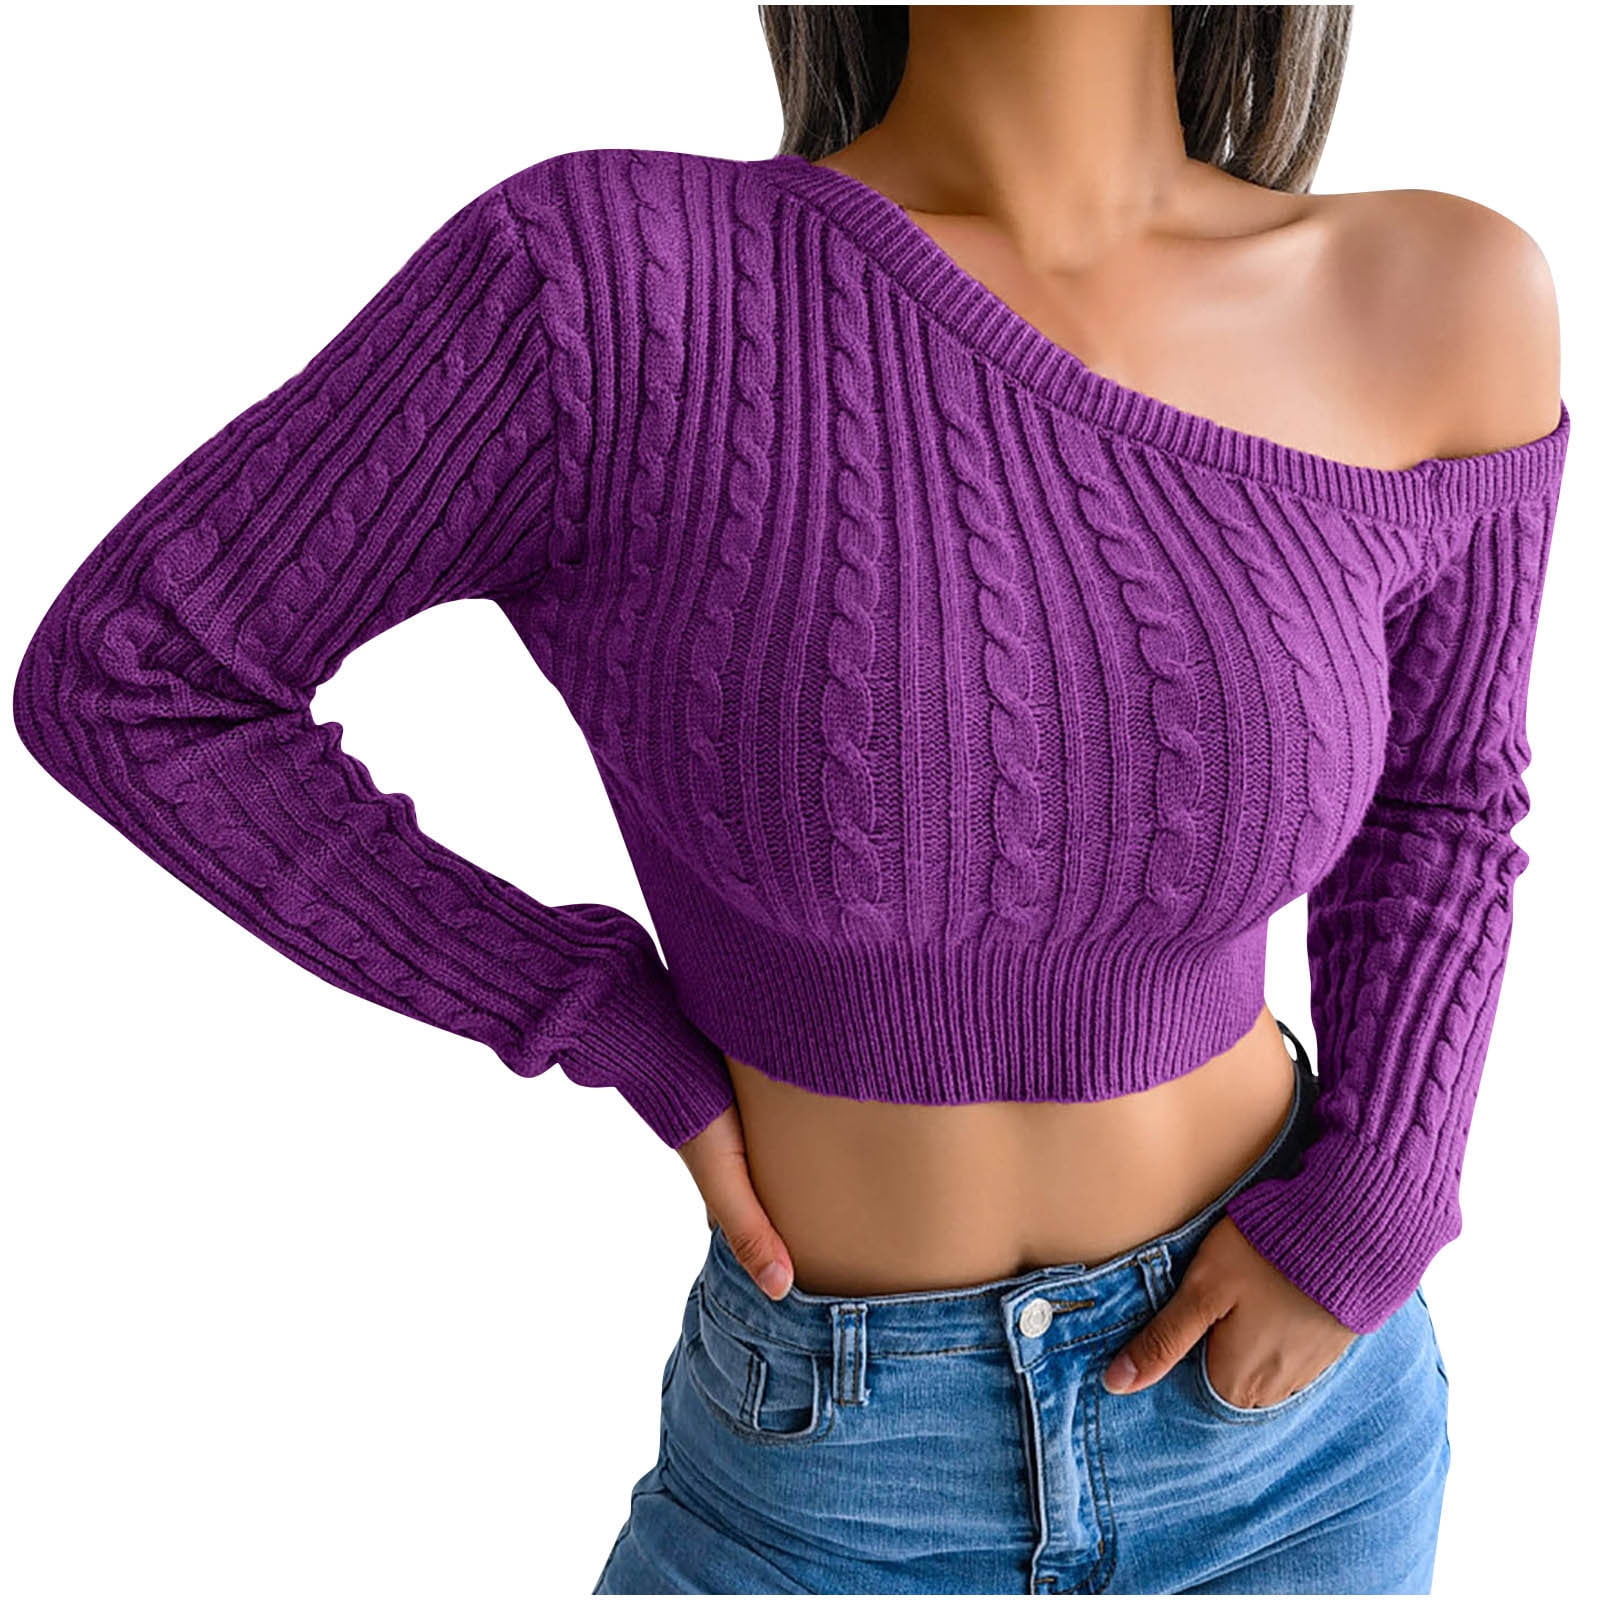 Heartwarming Magenta Purple Fuzzy Cropped Sweater